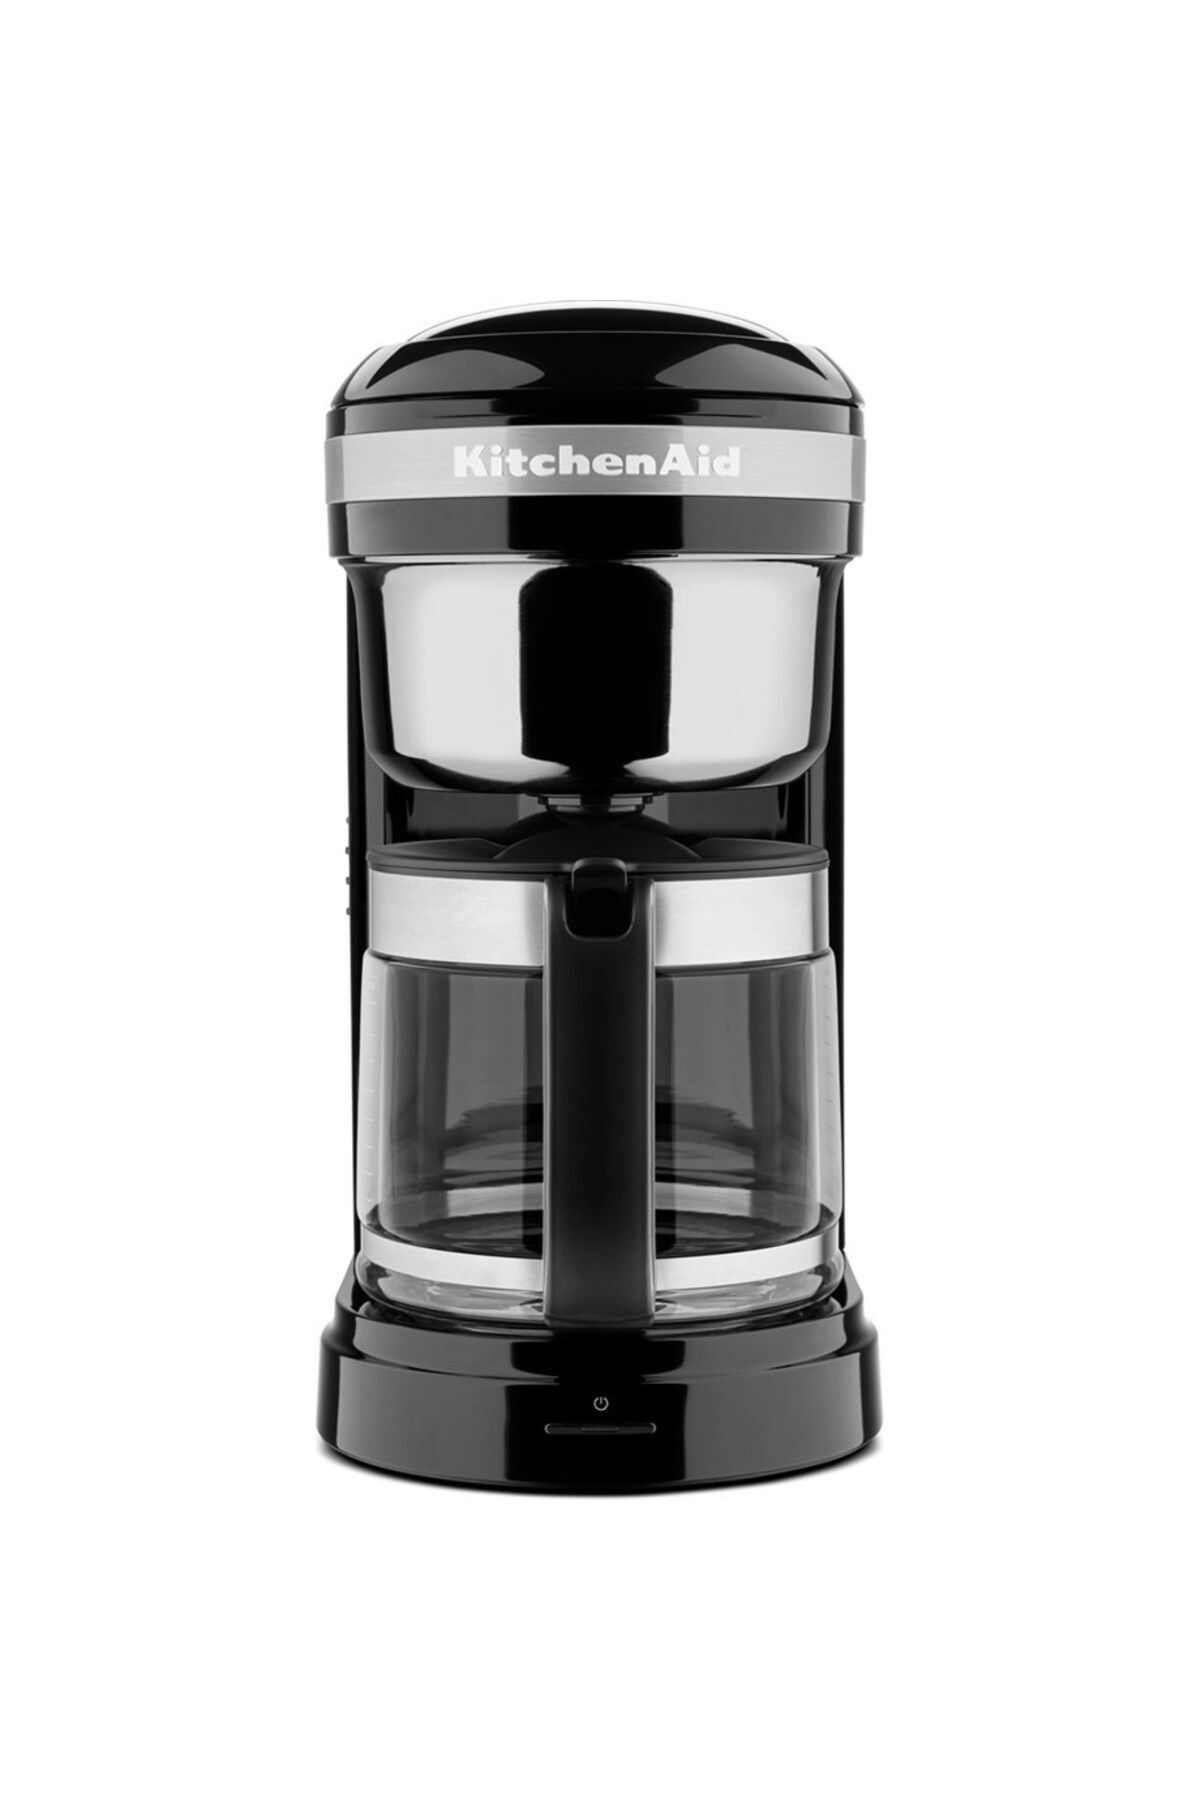 Kitchenaid Filtre Kahve Makinesi 5kcm1209eob Onyx Black